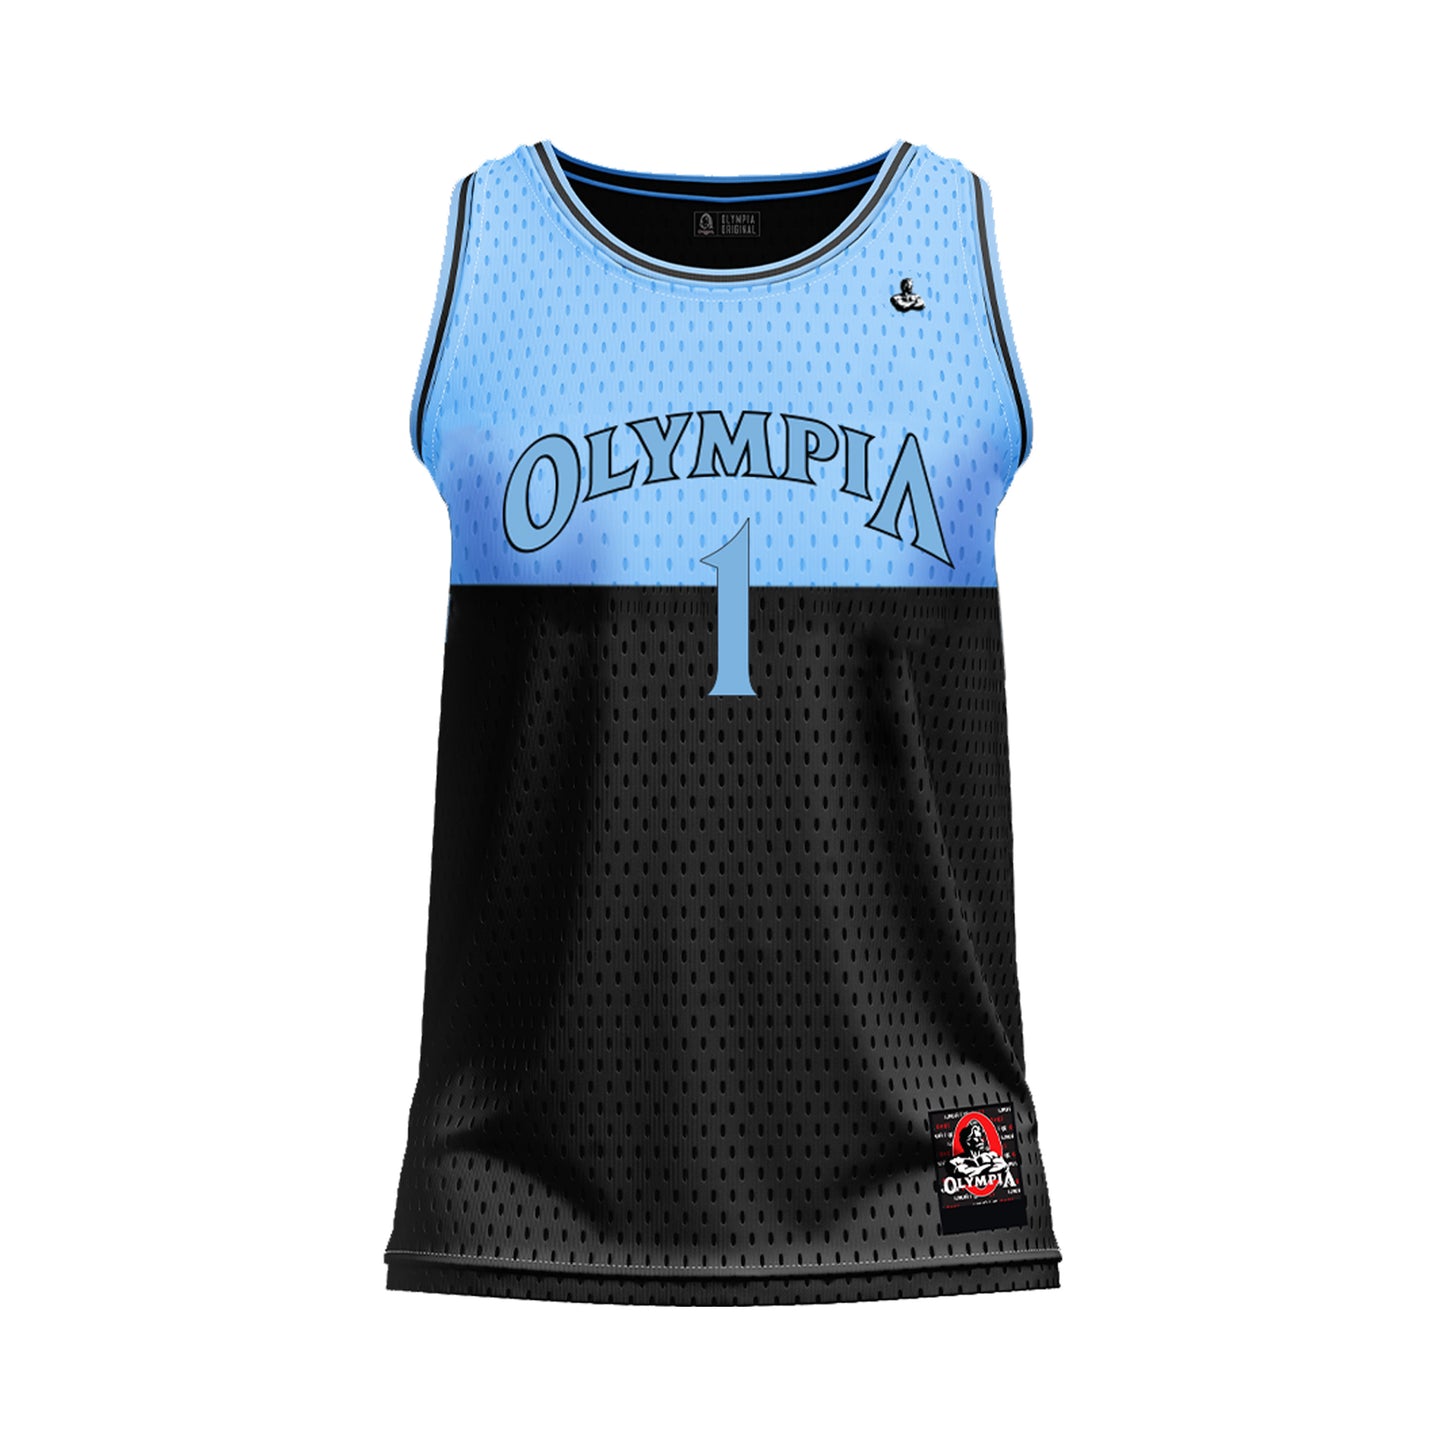 Olympia Basketball Jersey Black/Baby Blue